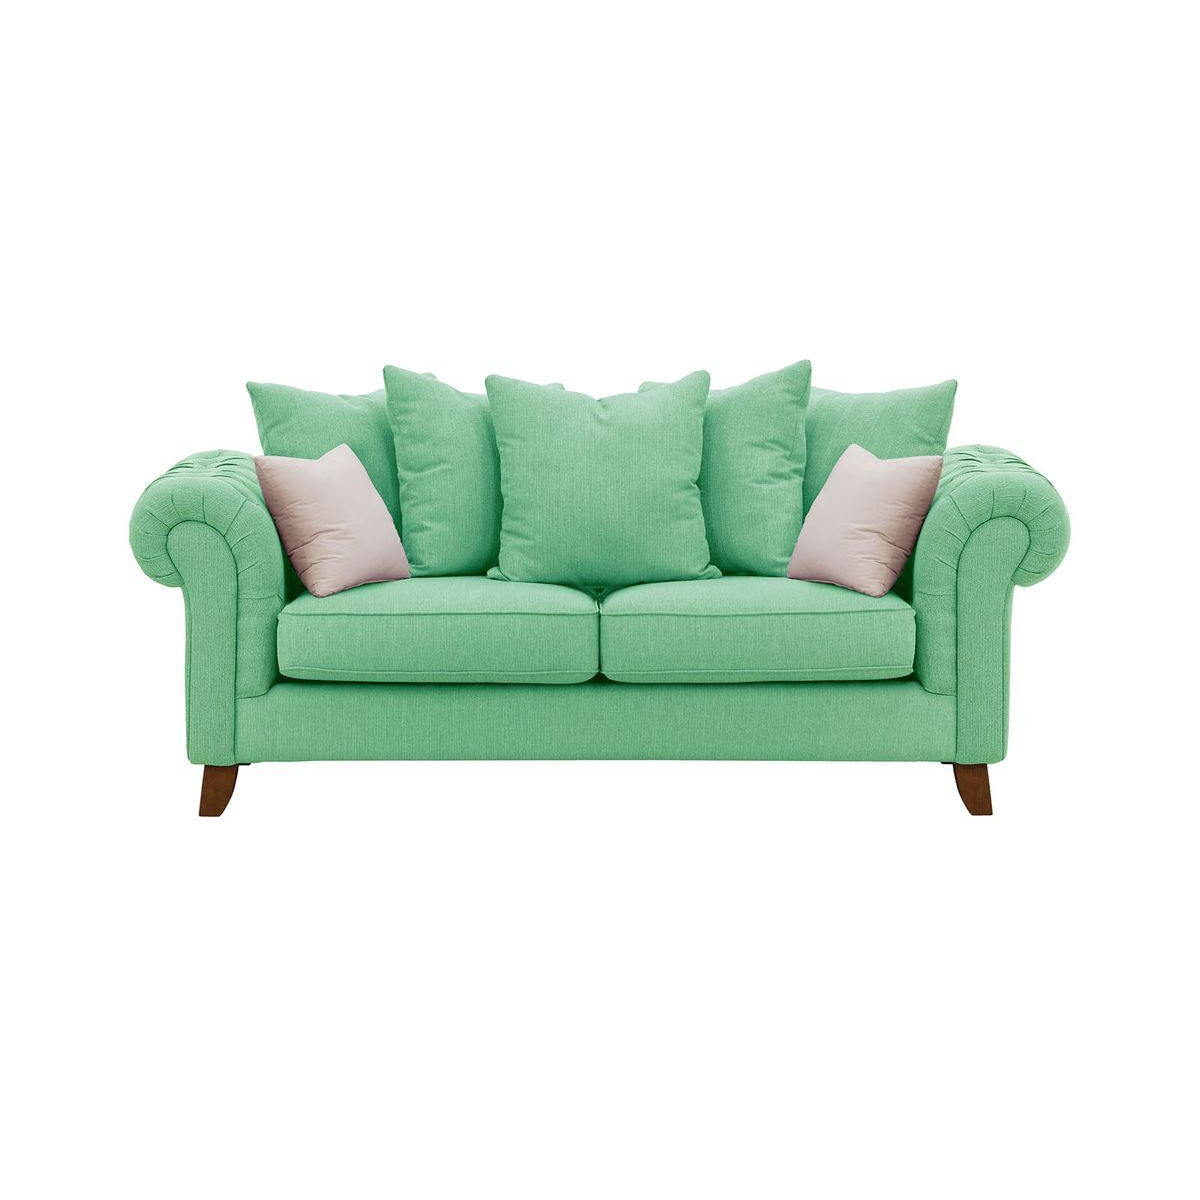 Monza 3 Seater Sofa, Turquoise/Lilac, Leg colour: dark oak - image 1